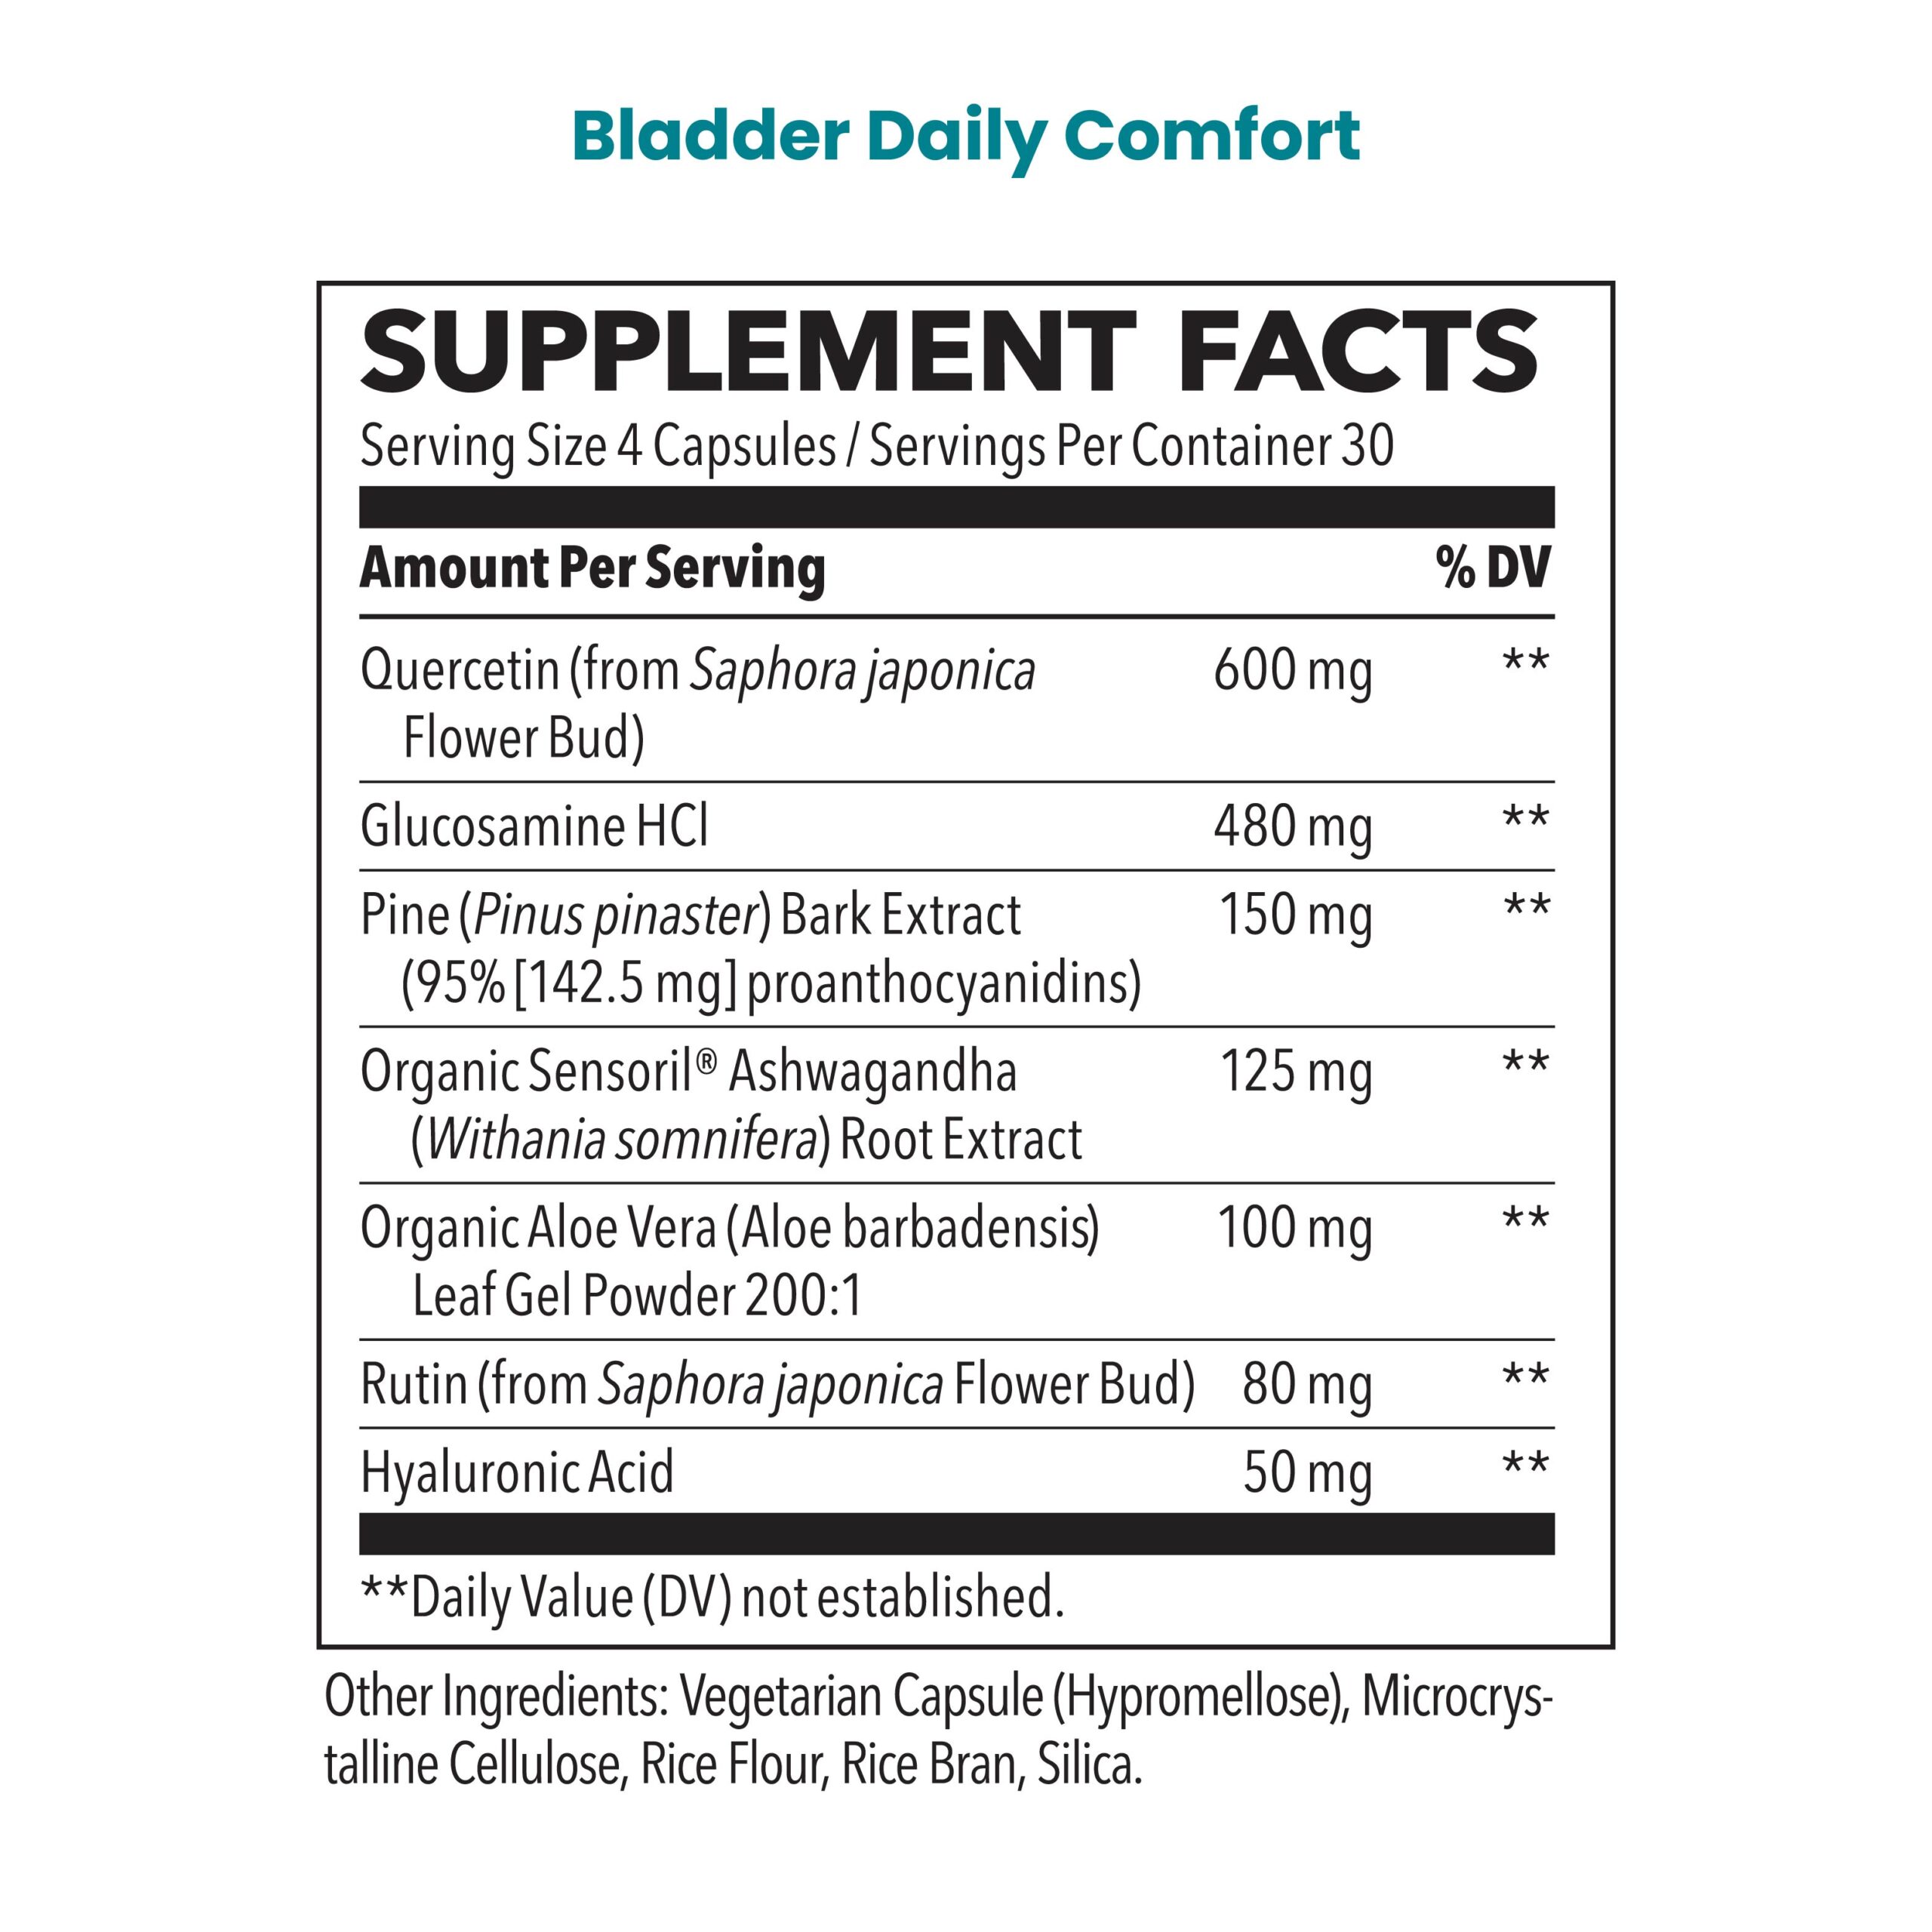 Bladder daily comfort supplement facts bundle